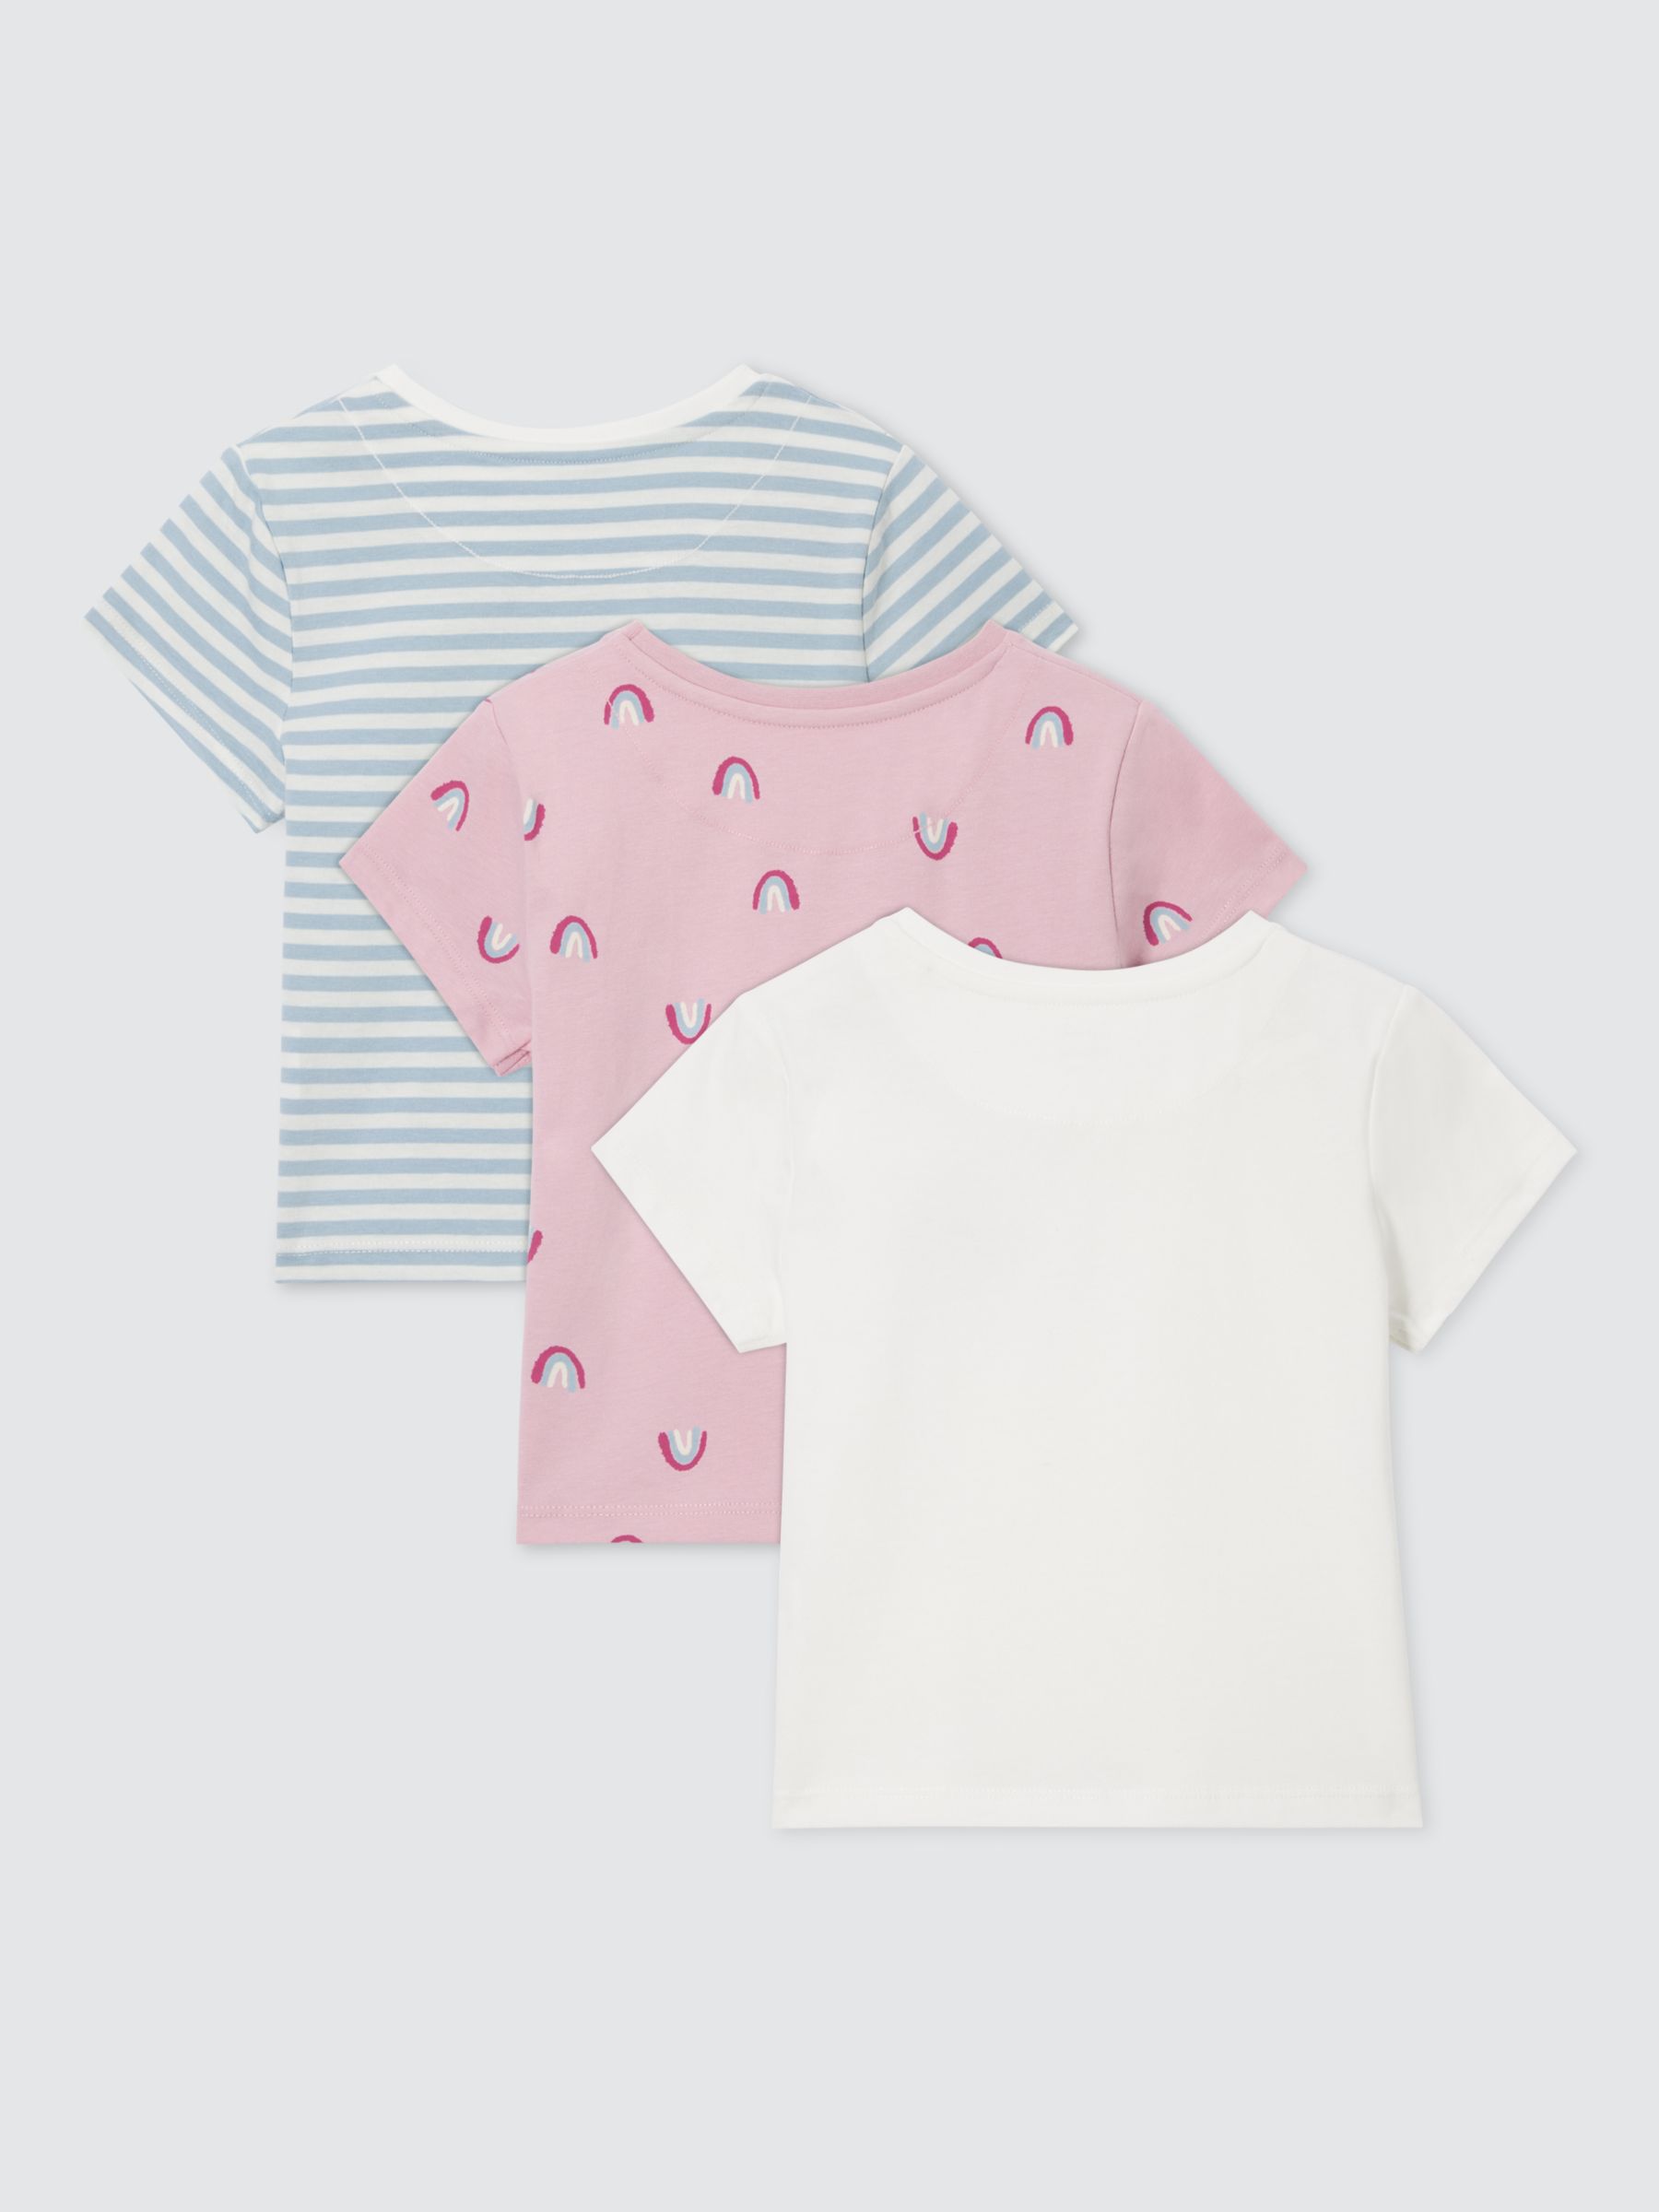 John Lewis Kids' Stripe/RainbowShort Sleeve T-Shirts, Pack of 3, White/Multi, 7 years